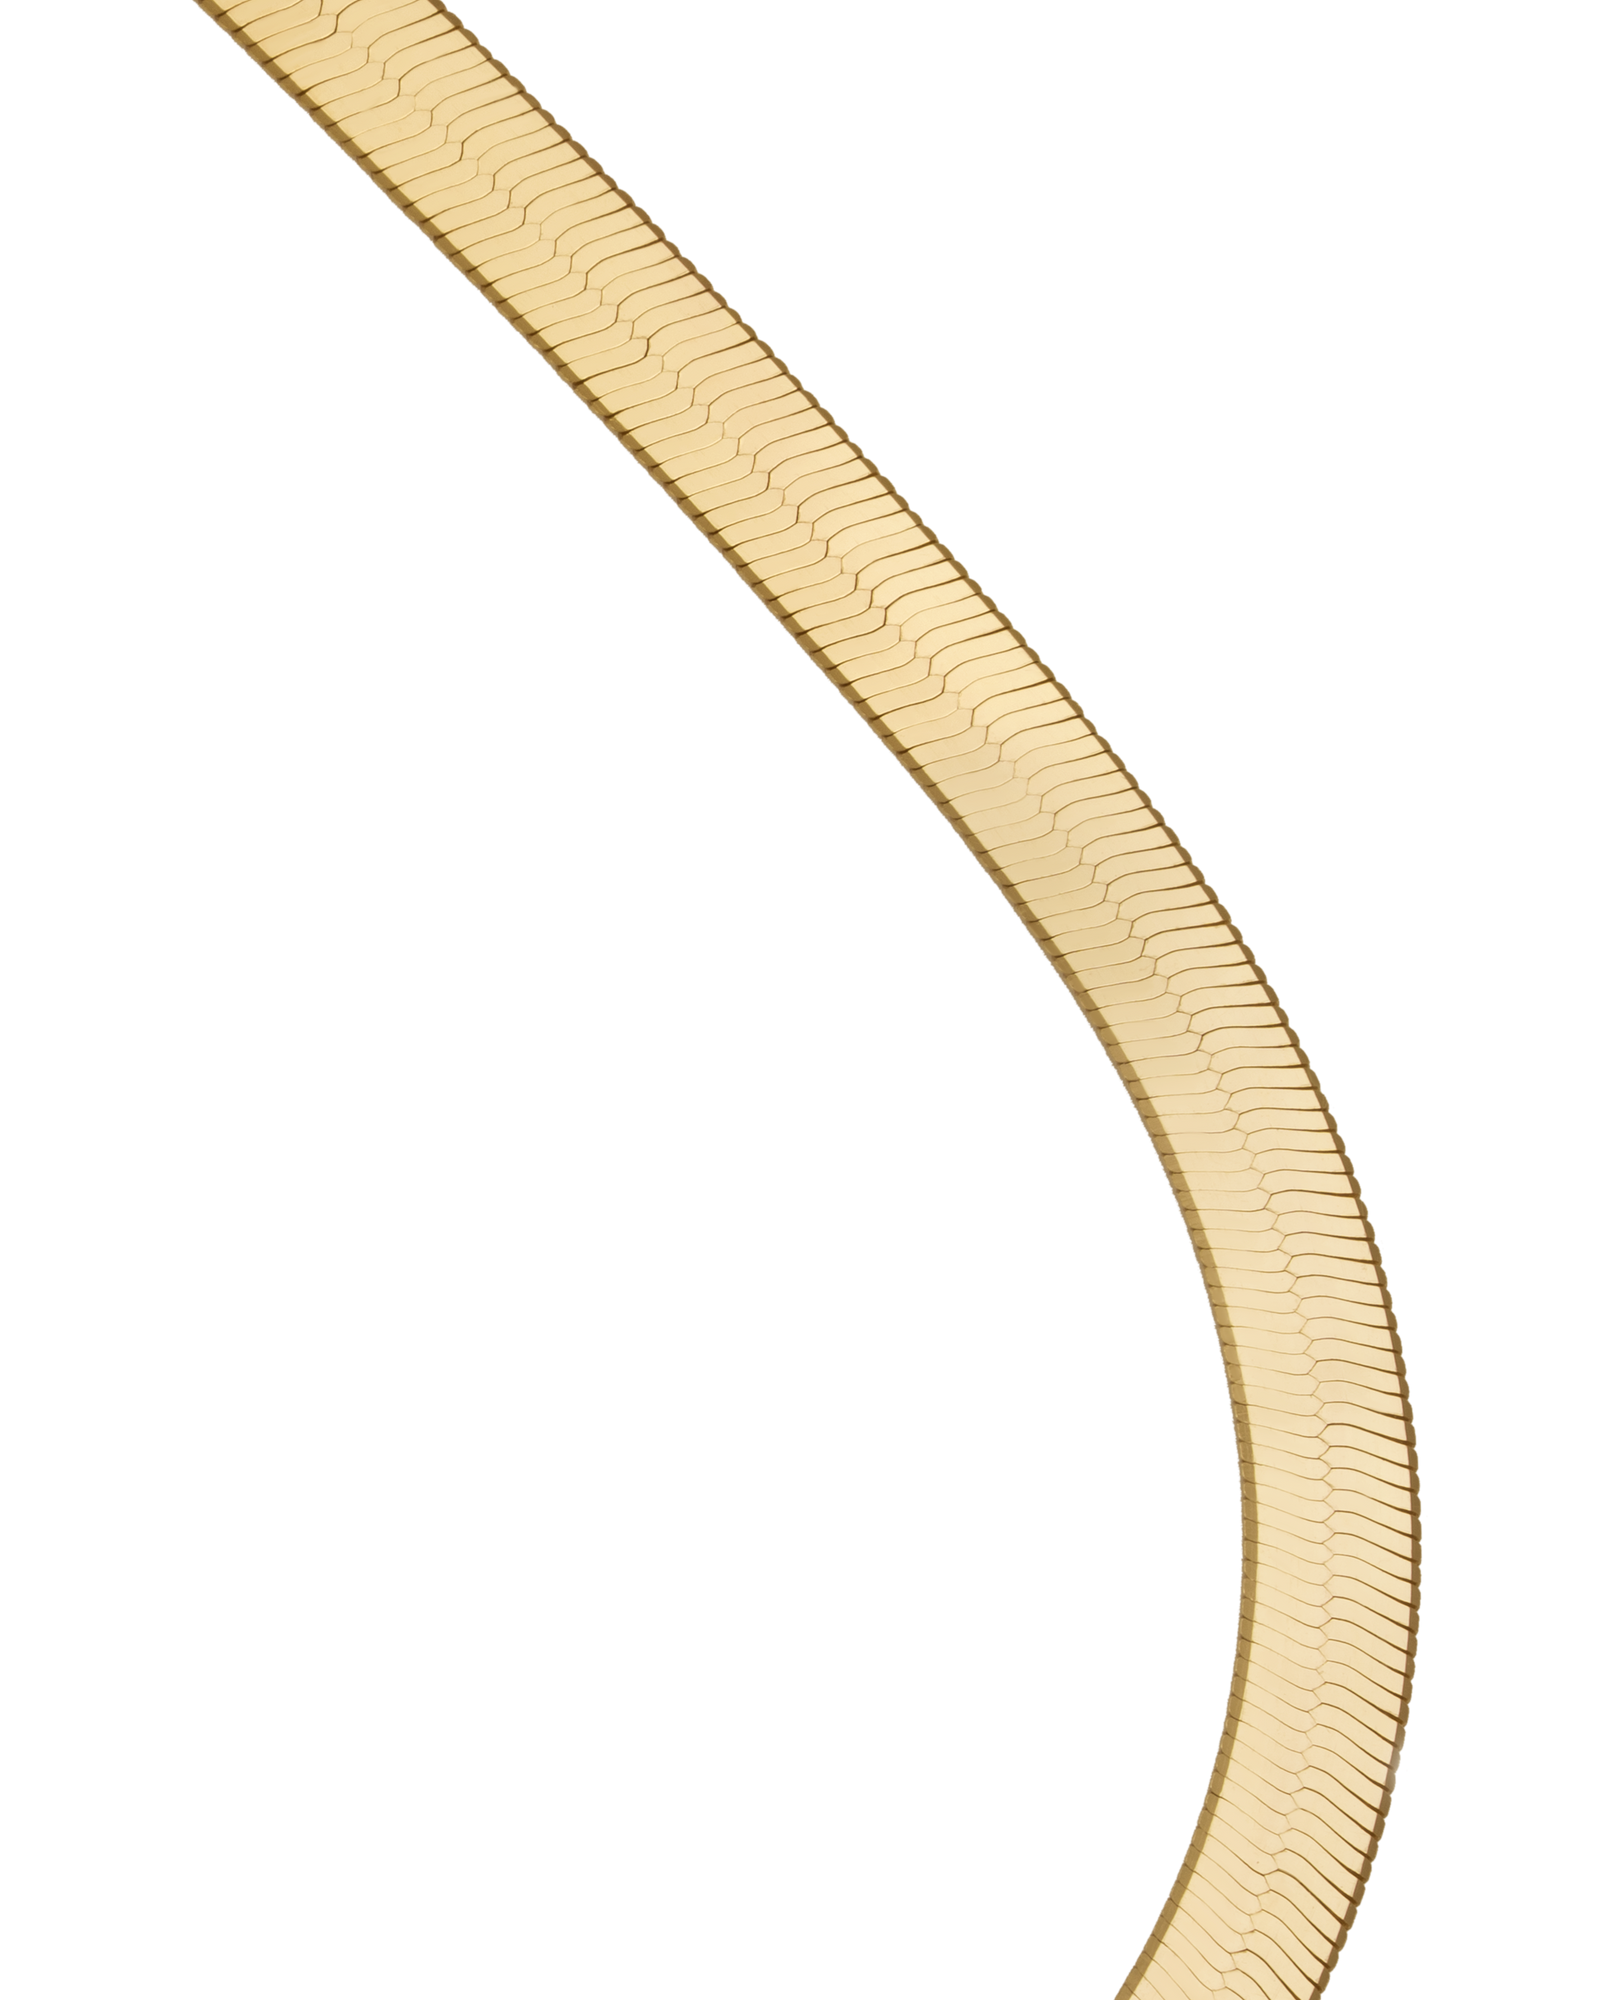 Flat Snake Chain 6mm